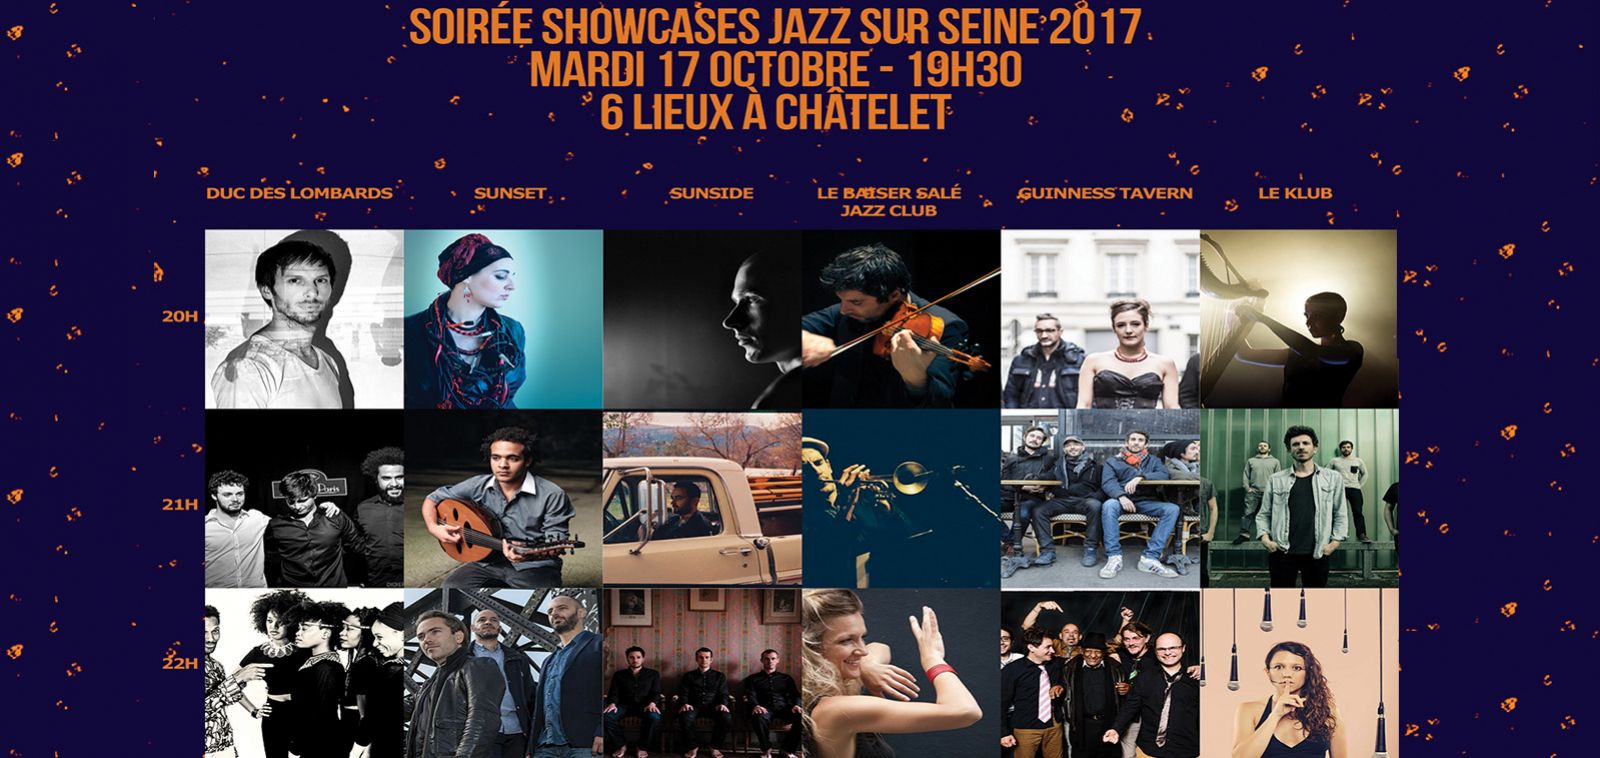 Soirée Showcases Jazz sur Seine 2017 - Mardi 17 Octobre 2017